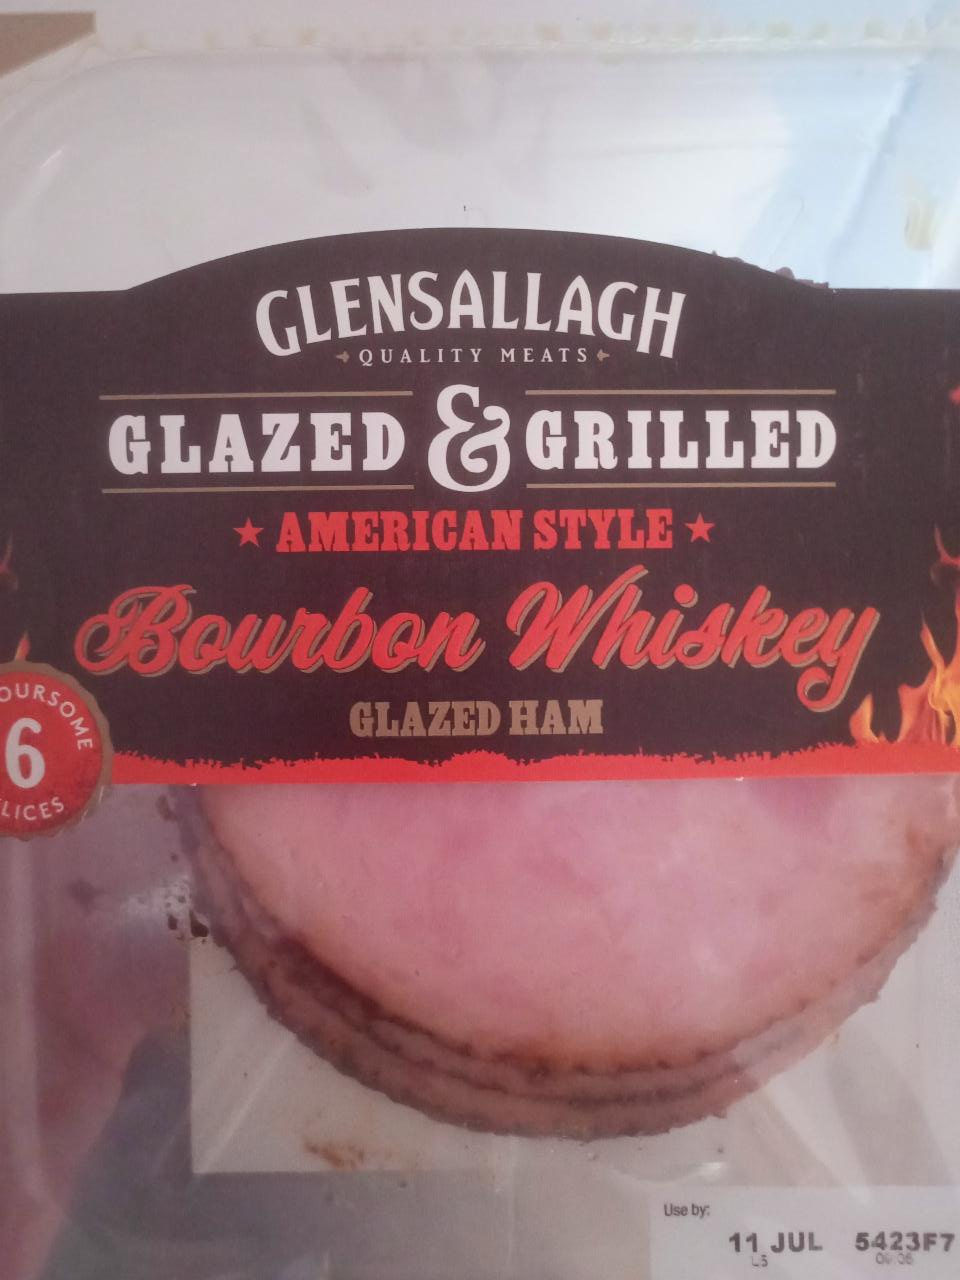 Fotografie - Glazed & Grilled Bourbon Whiskey Glazed Ham Glensallagh